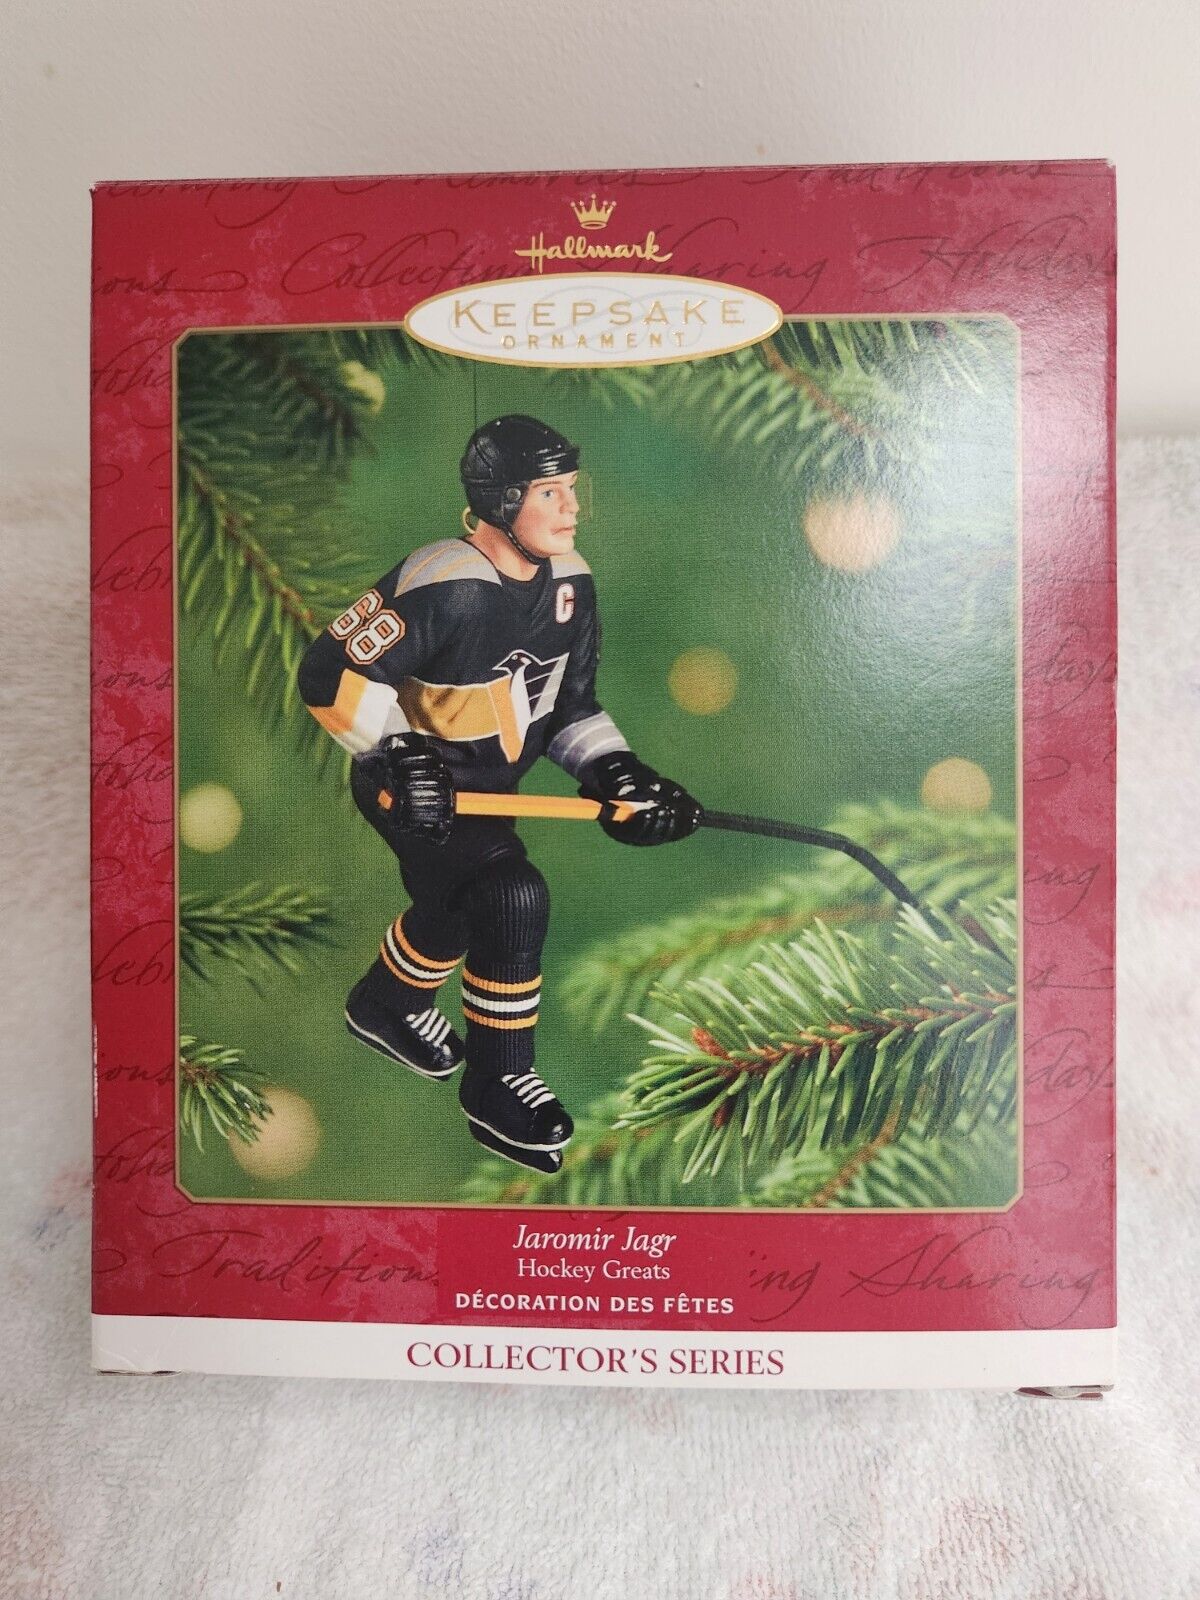 Hallmark Keepsake Ornament Collector\'s Series JAROMIR JAGR Hockey Greats 2001 